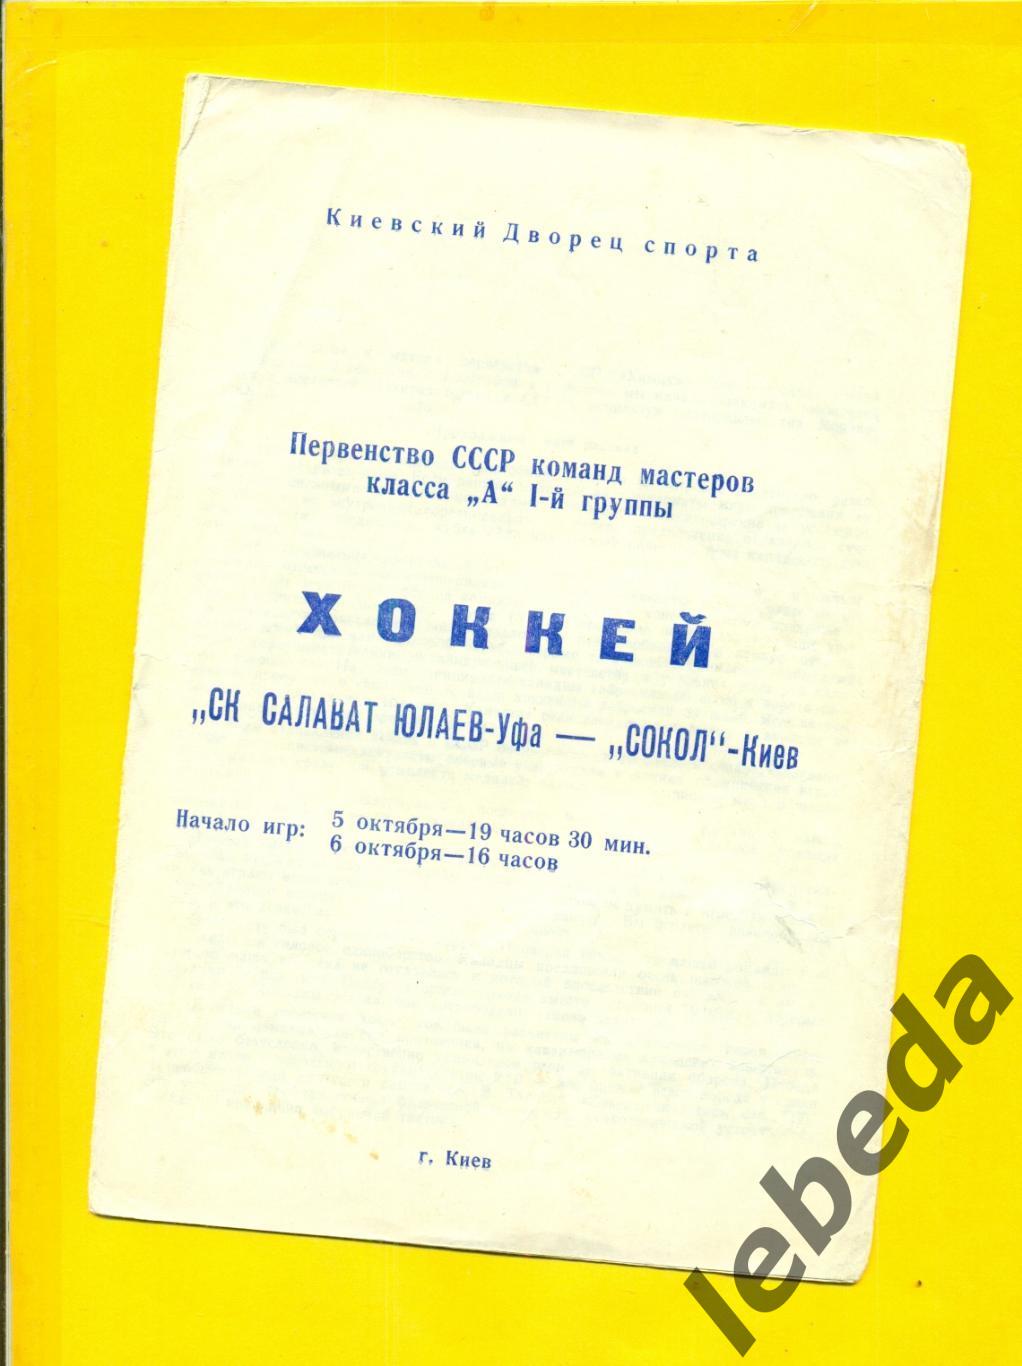 Сокол Киев - Салават Юлаев Уфа - 1973 /1974г. (5-6.10.73.)